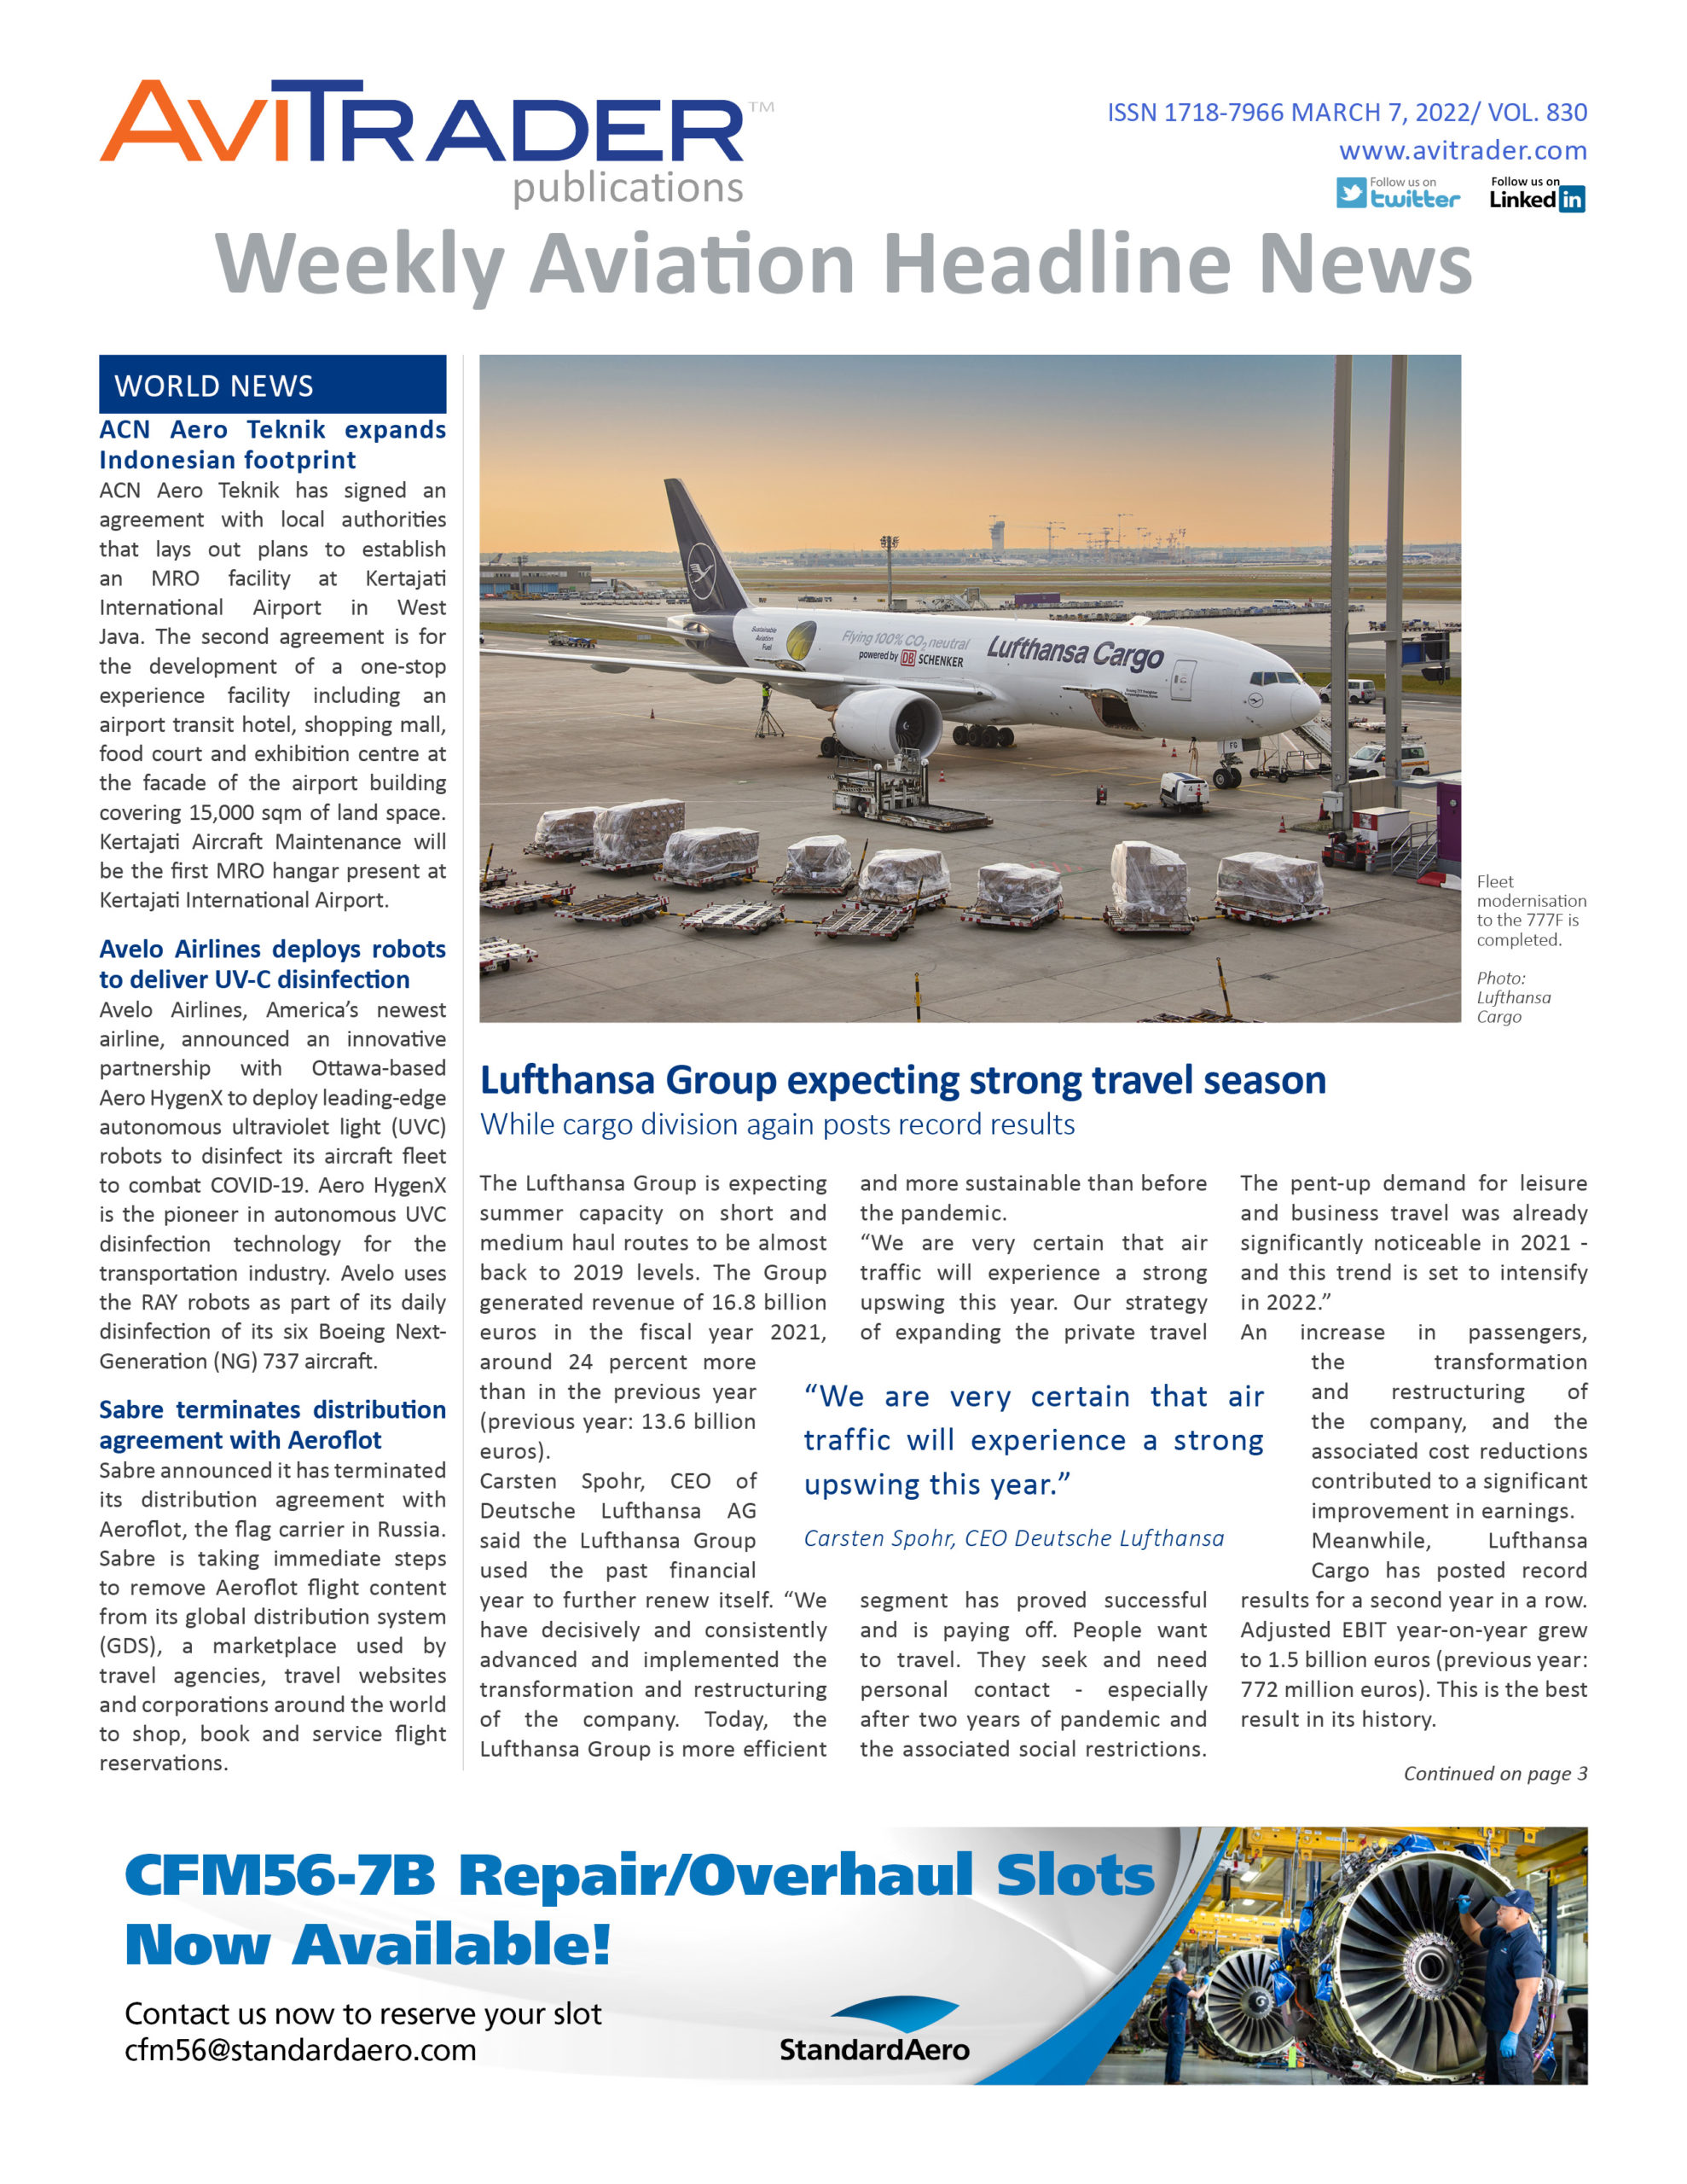 AviTrader_Weekly_Headline_News_Cover_2022-03-07